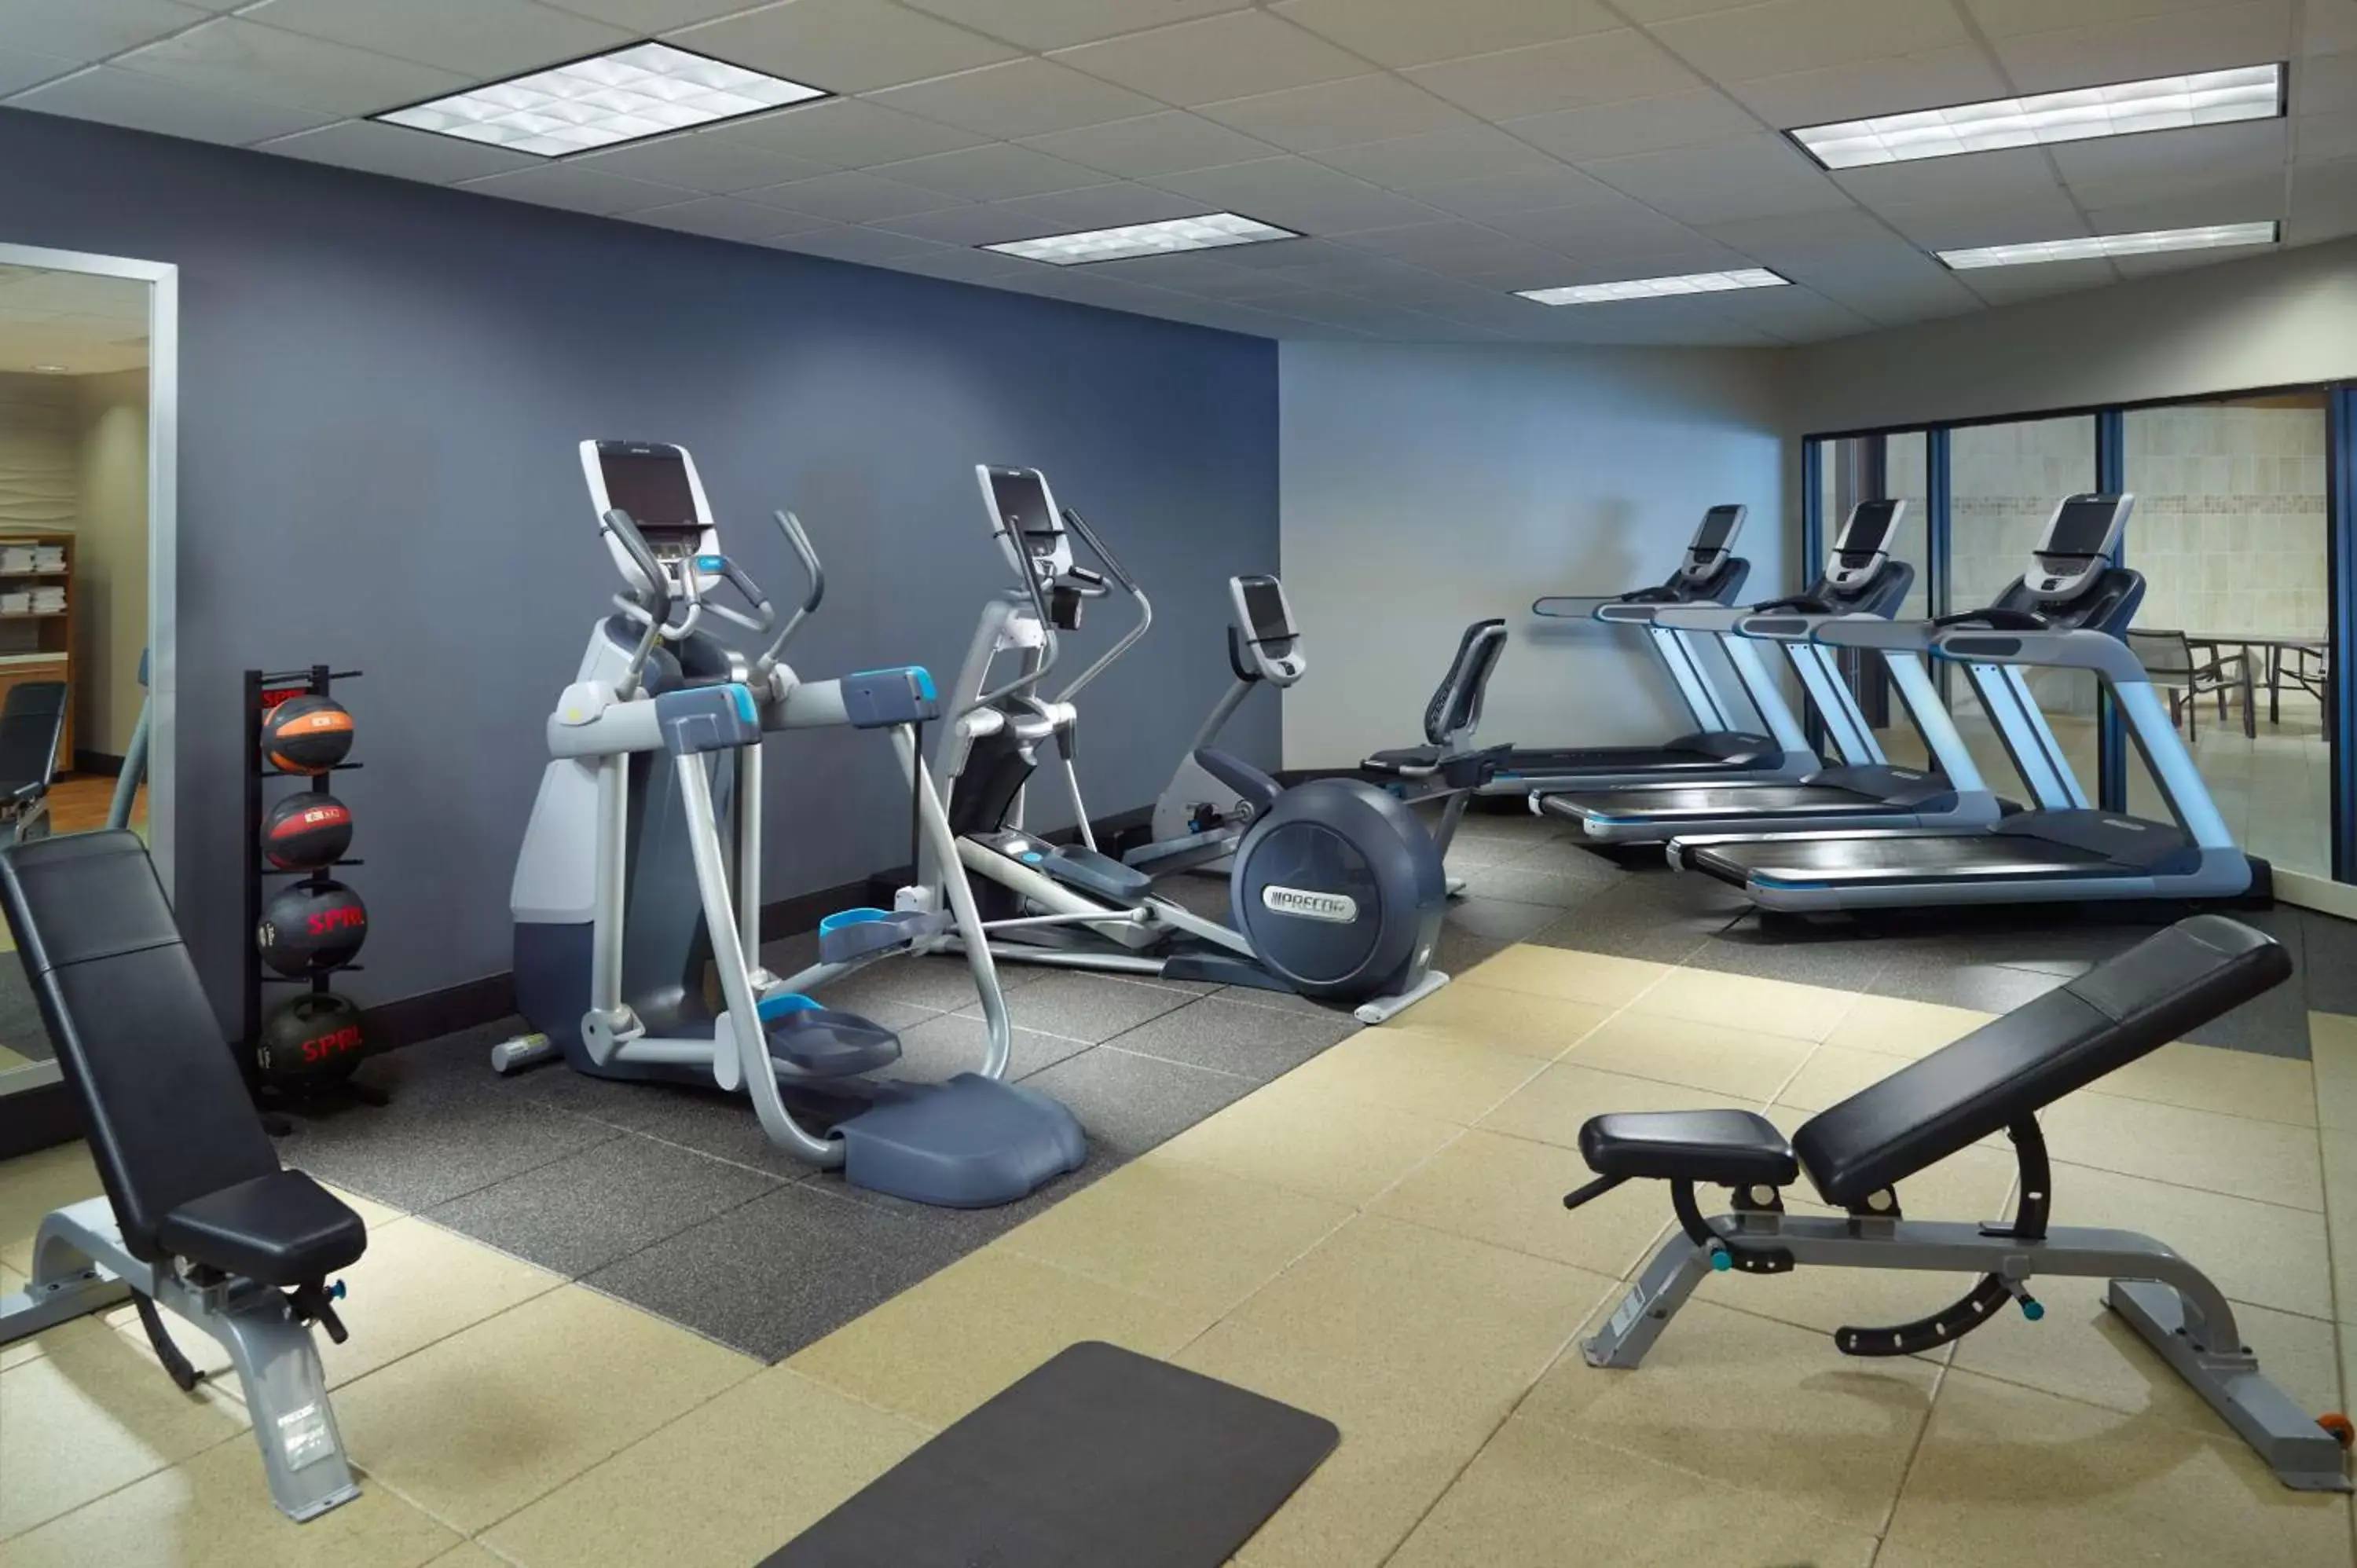 Fitness centre/facilities, Fitness Center/Facilities in Hilton Atlanta Northeast